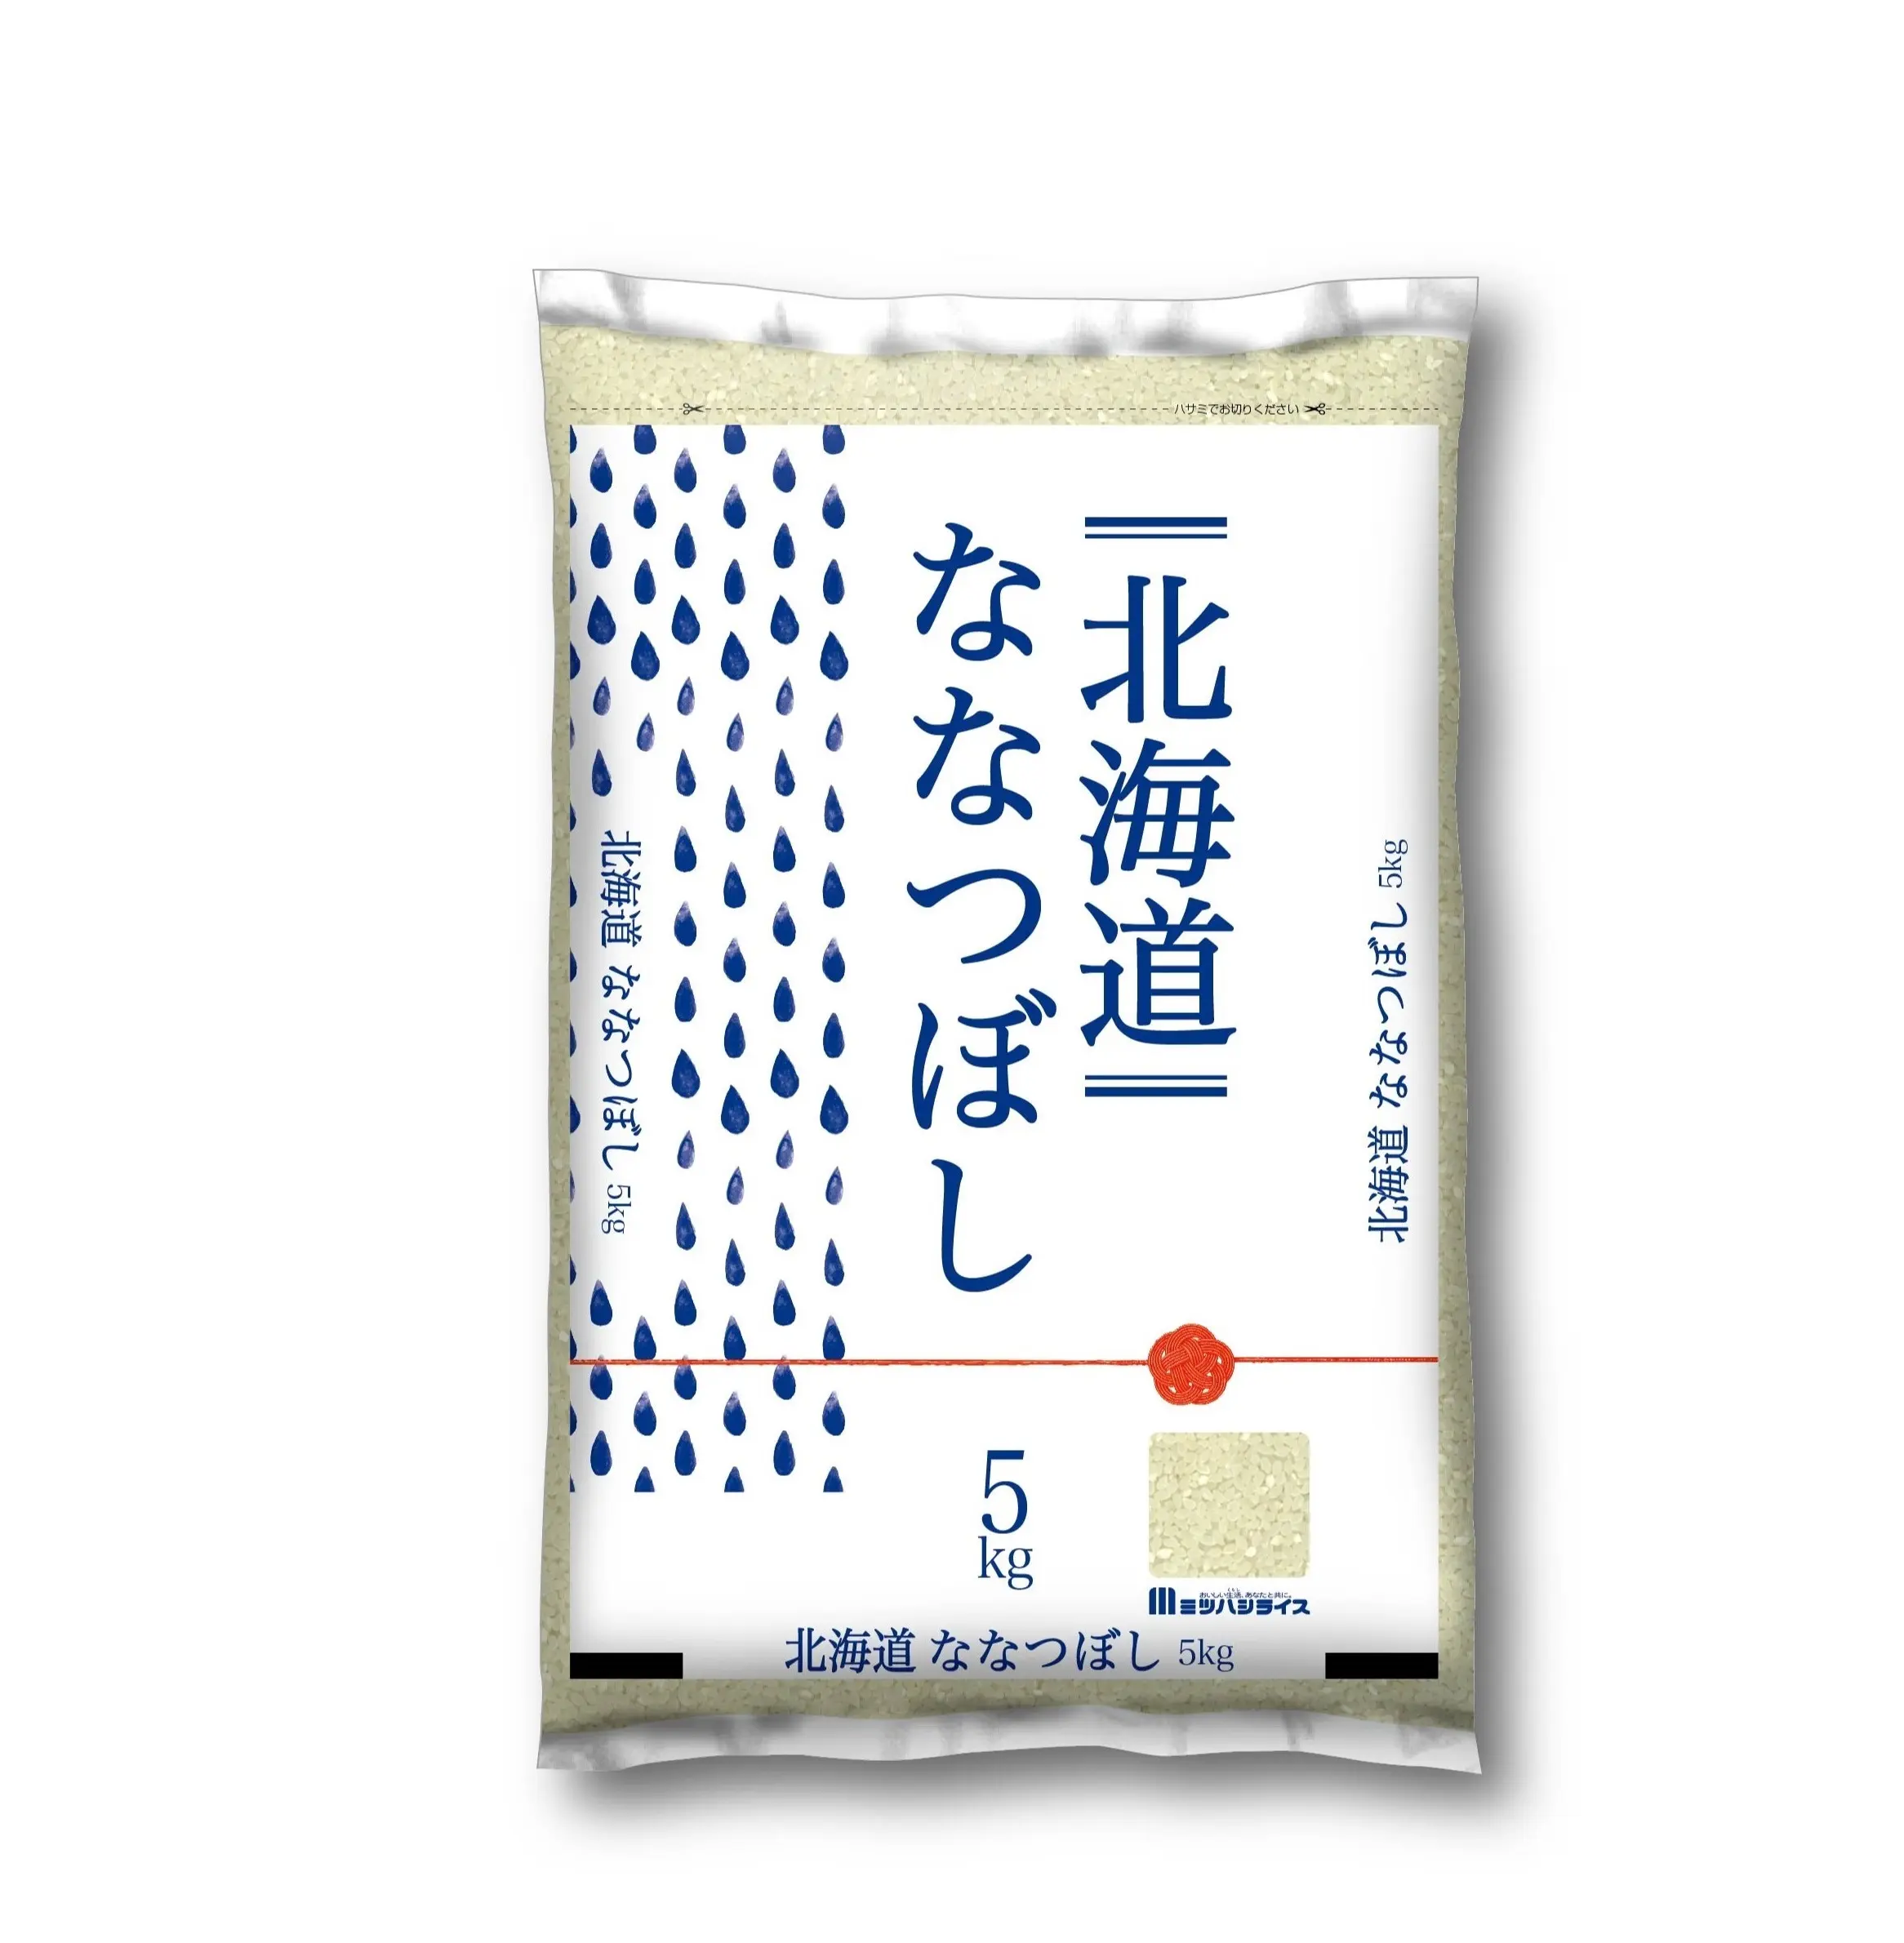 Hokkaido Nanatsuboshi benzersiz toptan tedarikçisi orijinal fiyat pirinç